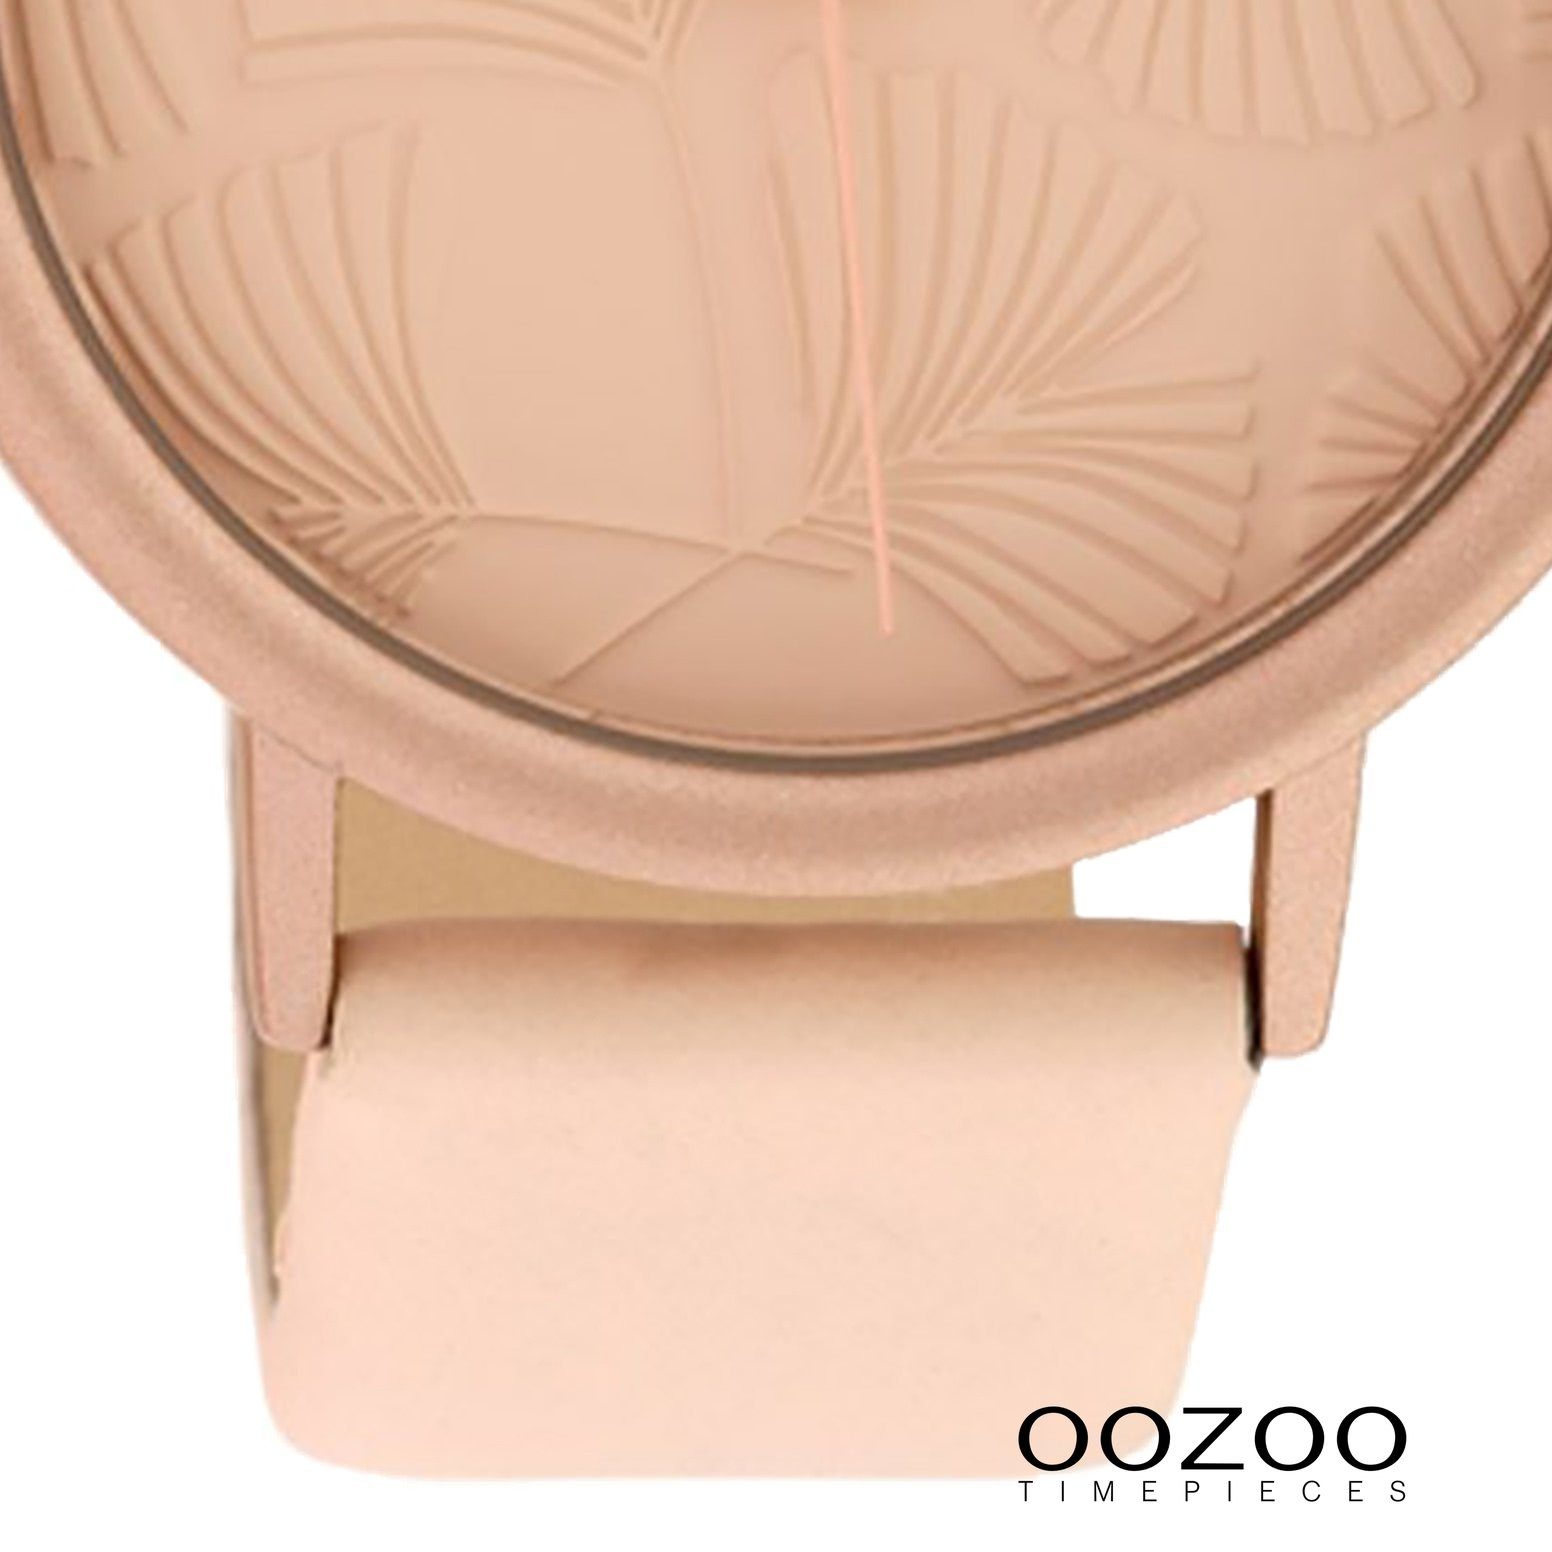 Damen Armbanduhr groß (ca. Lederarmband rosa, Quarzuhr OOZOO rosa, rund, Oozoo Damenuhr 42mm), Fashion